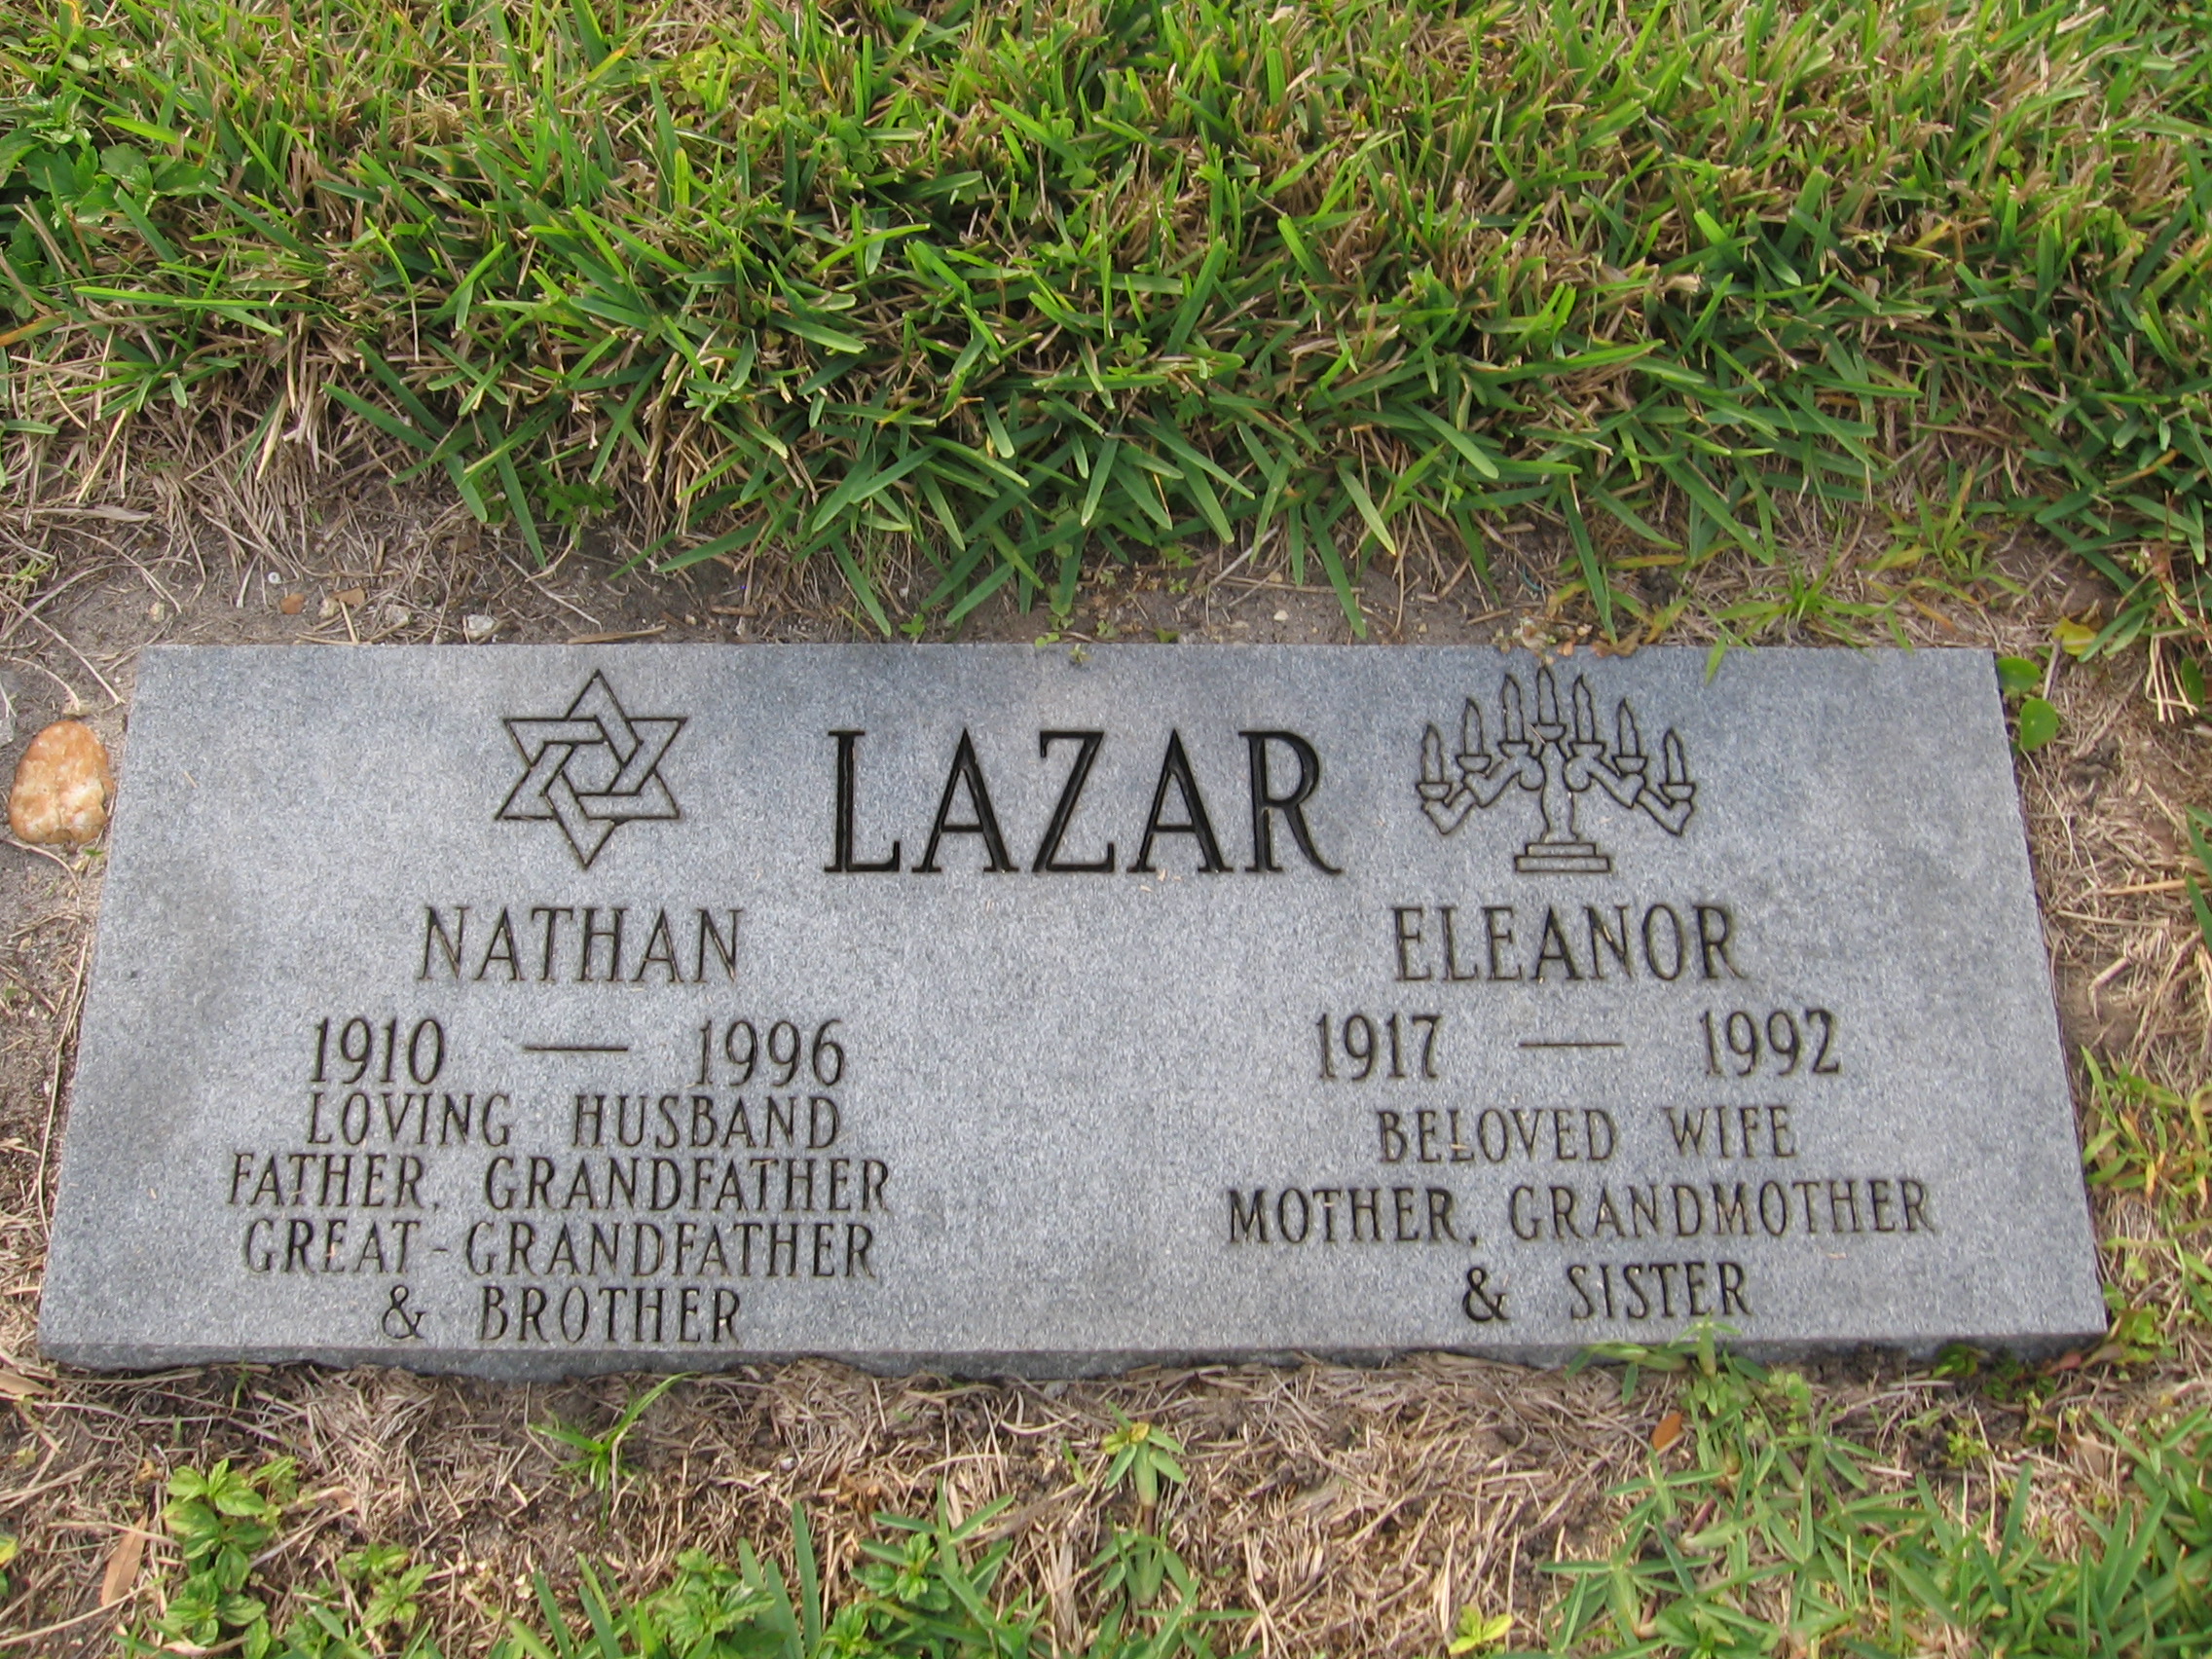 Eleanor Lazar